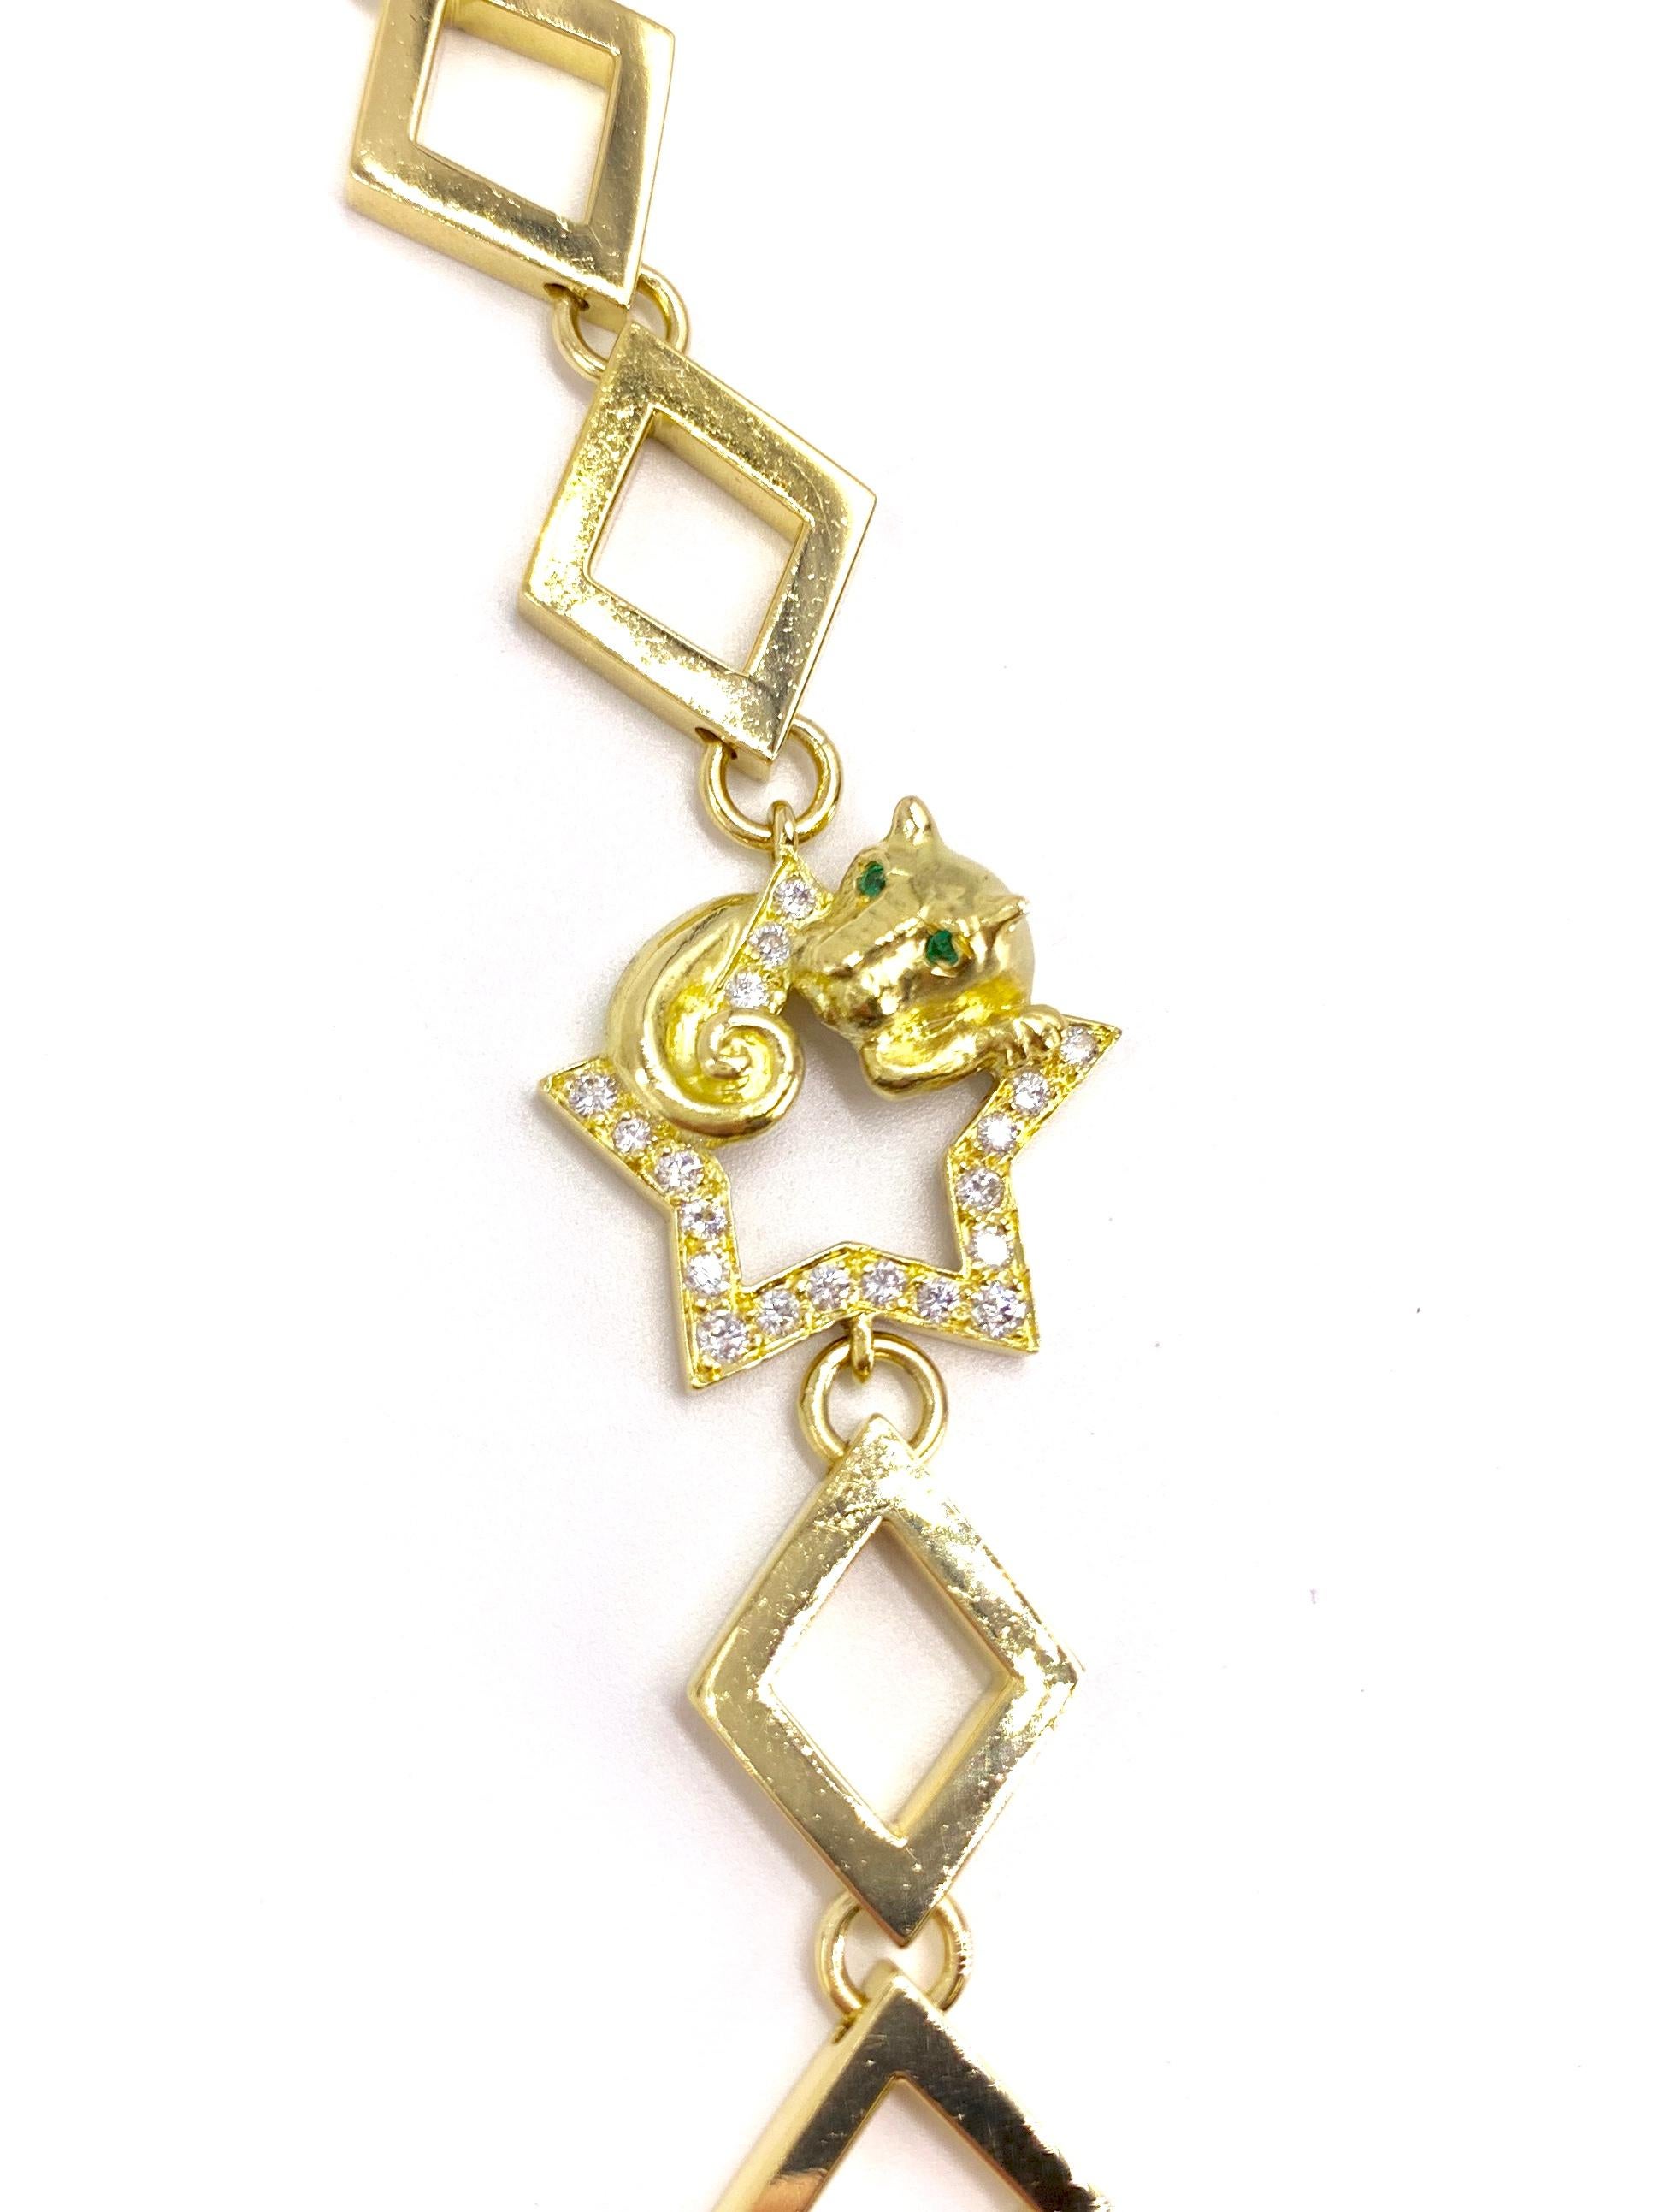 Modern 18 Karat Charles Turi Animal Star Necklace with Diamonds and Gemstones